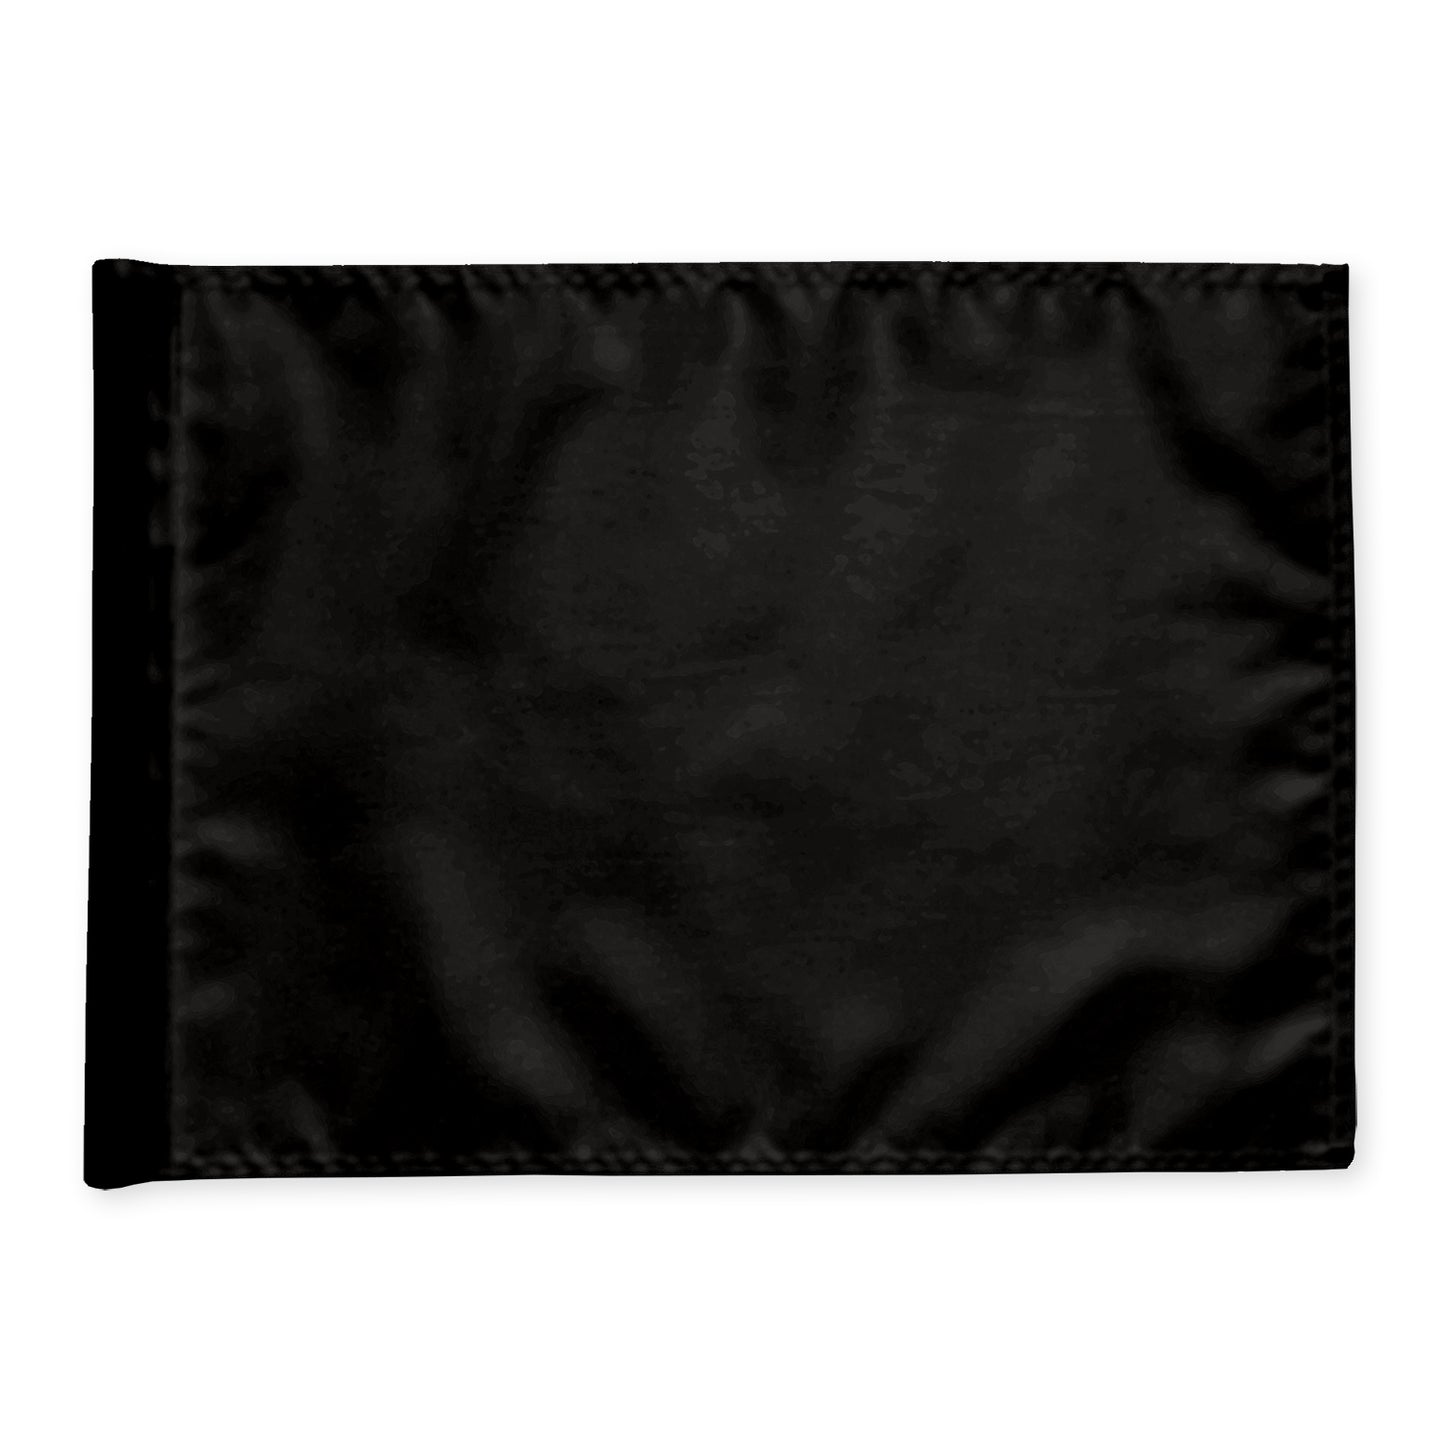 Puttinggreen flag, black, extra durable nylon fabric.